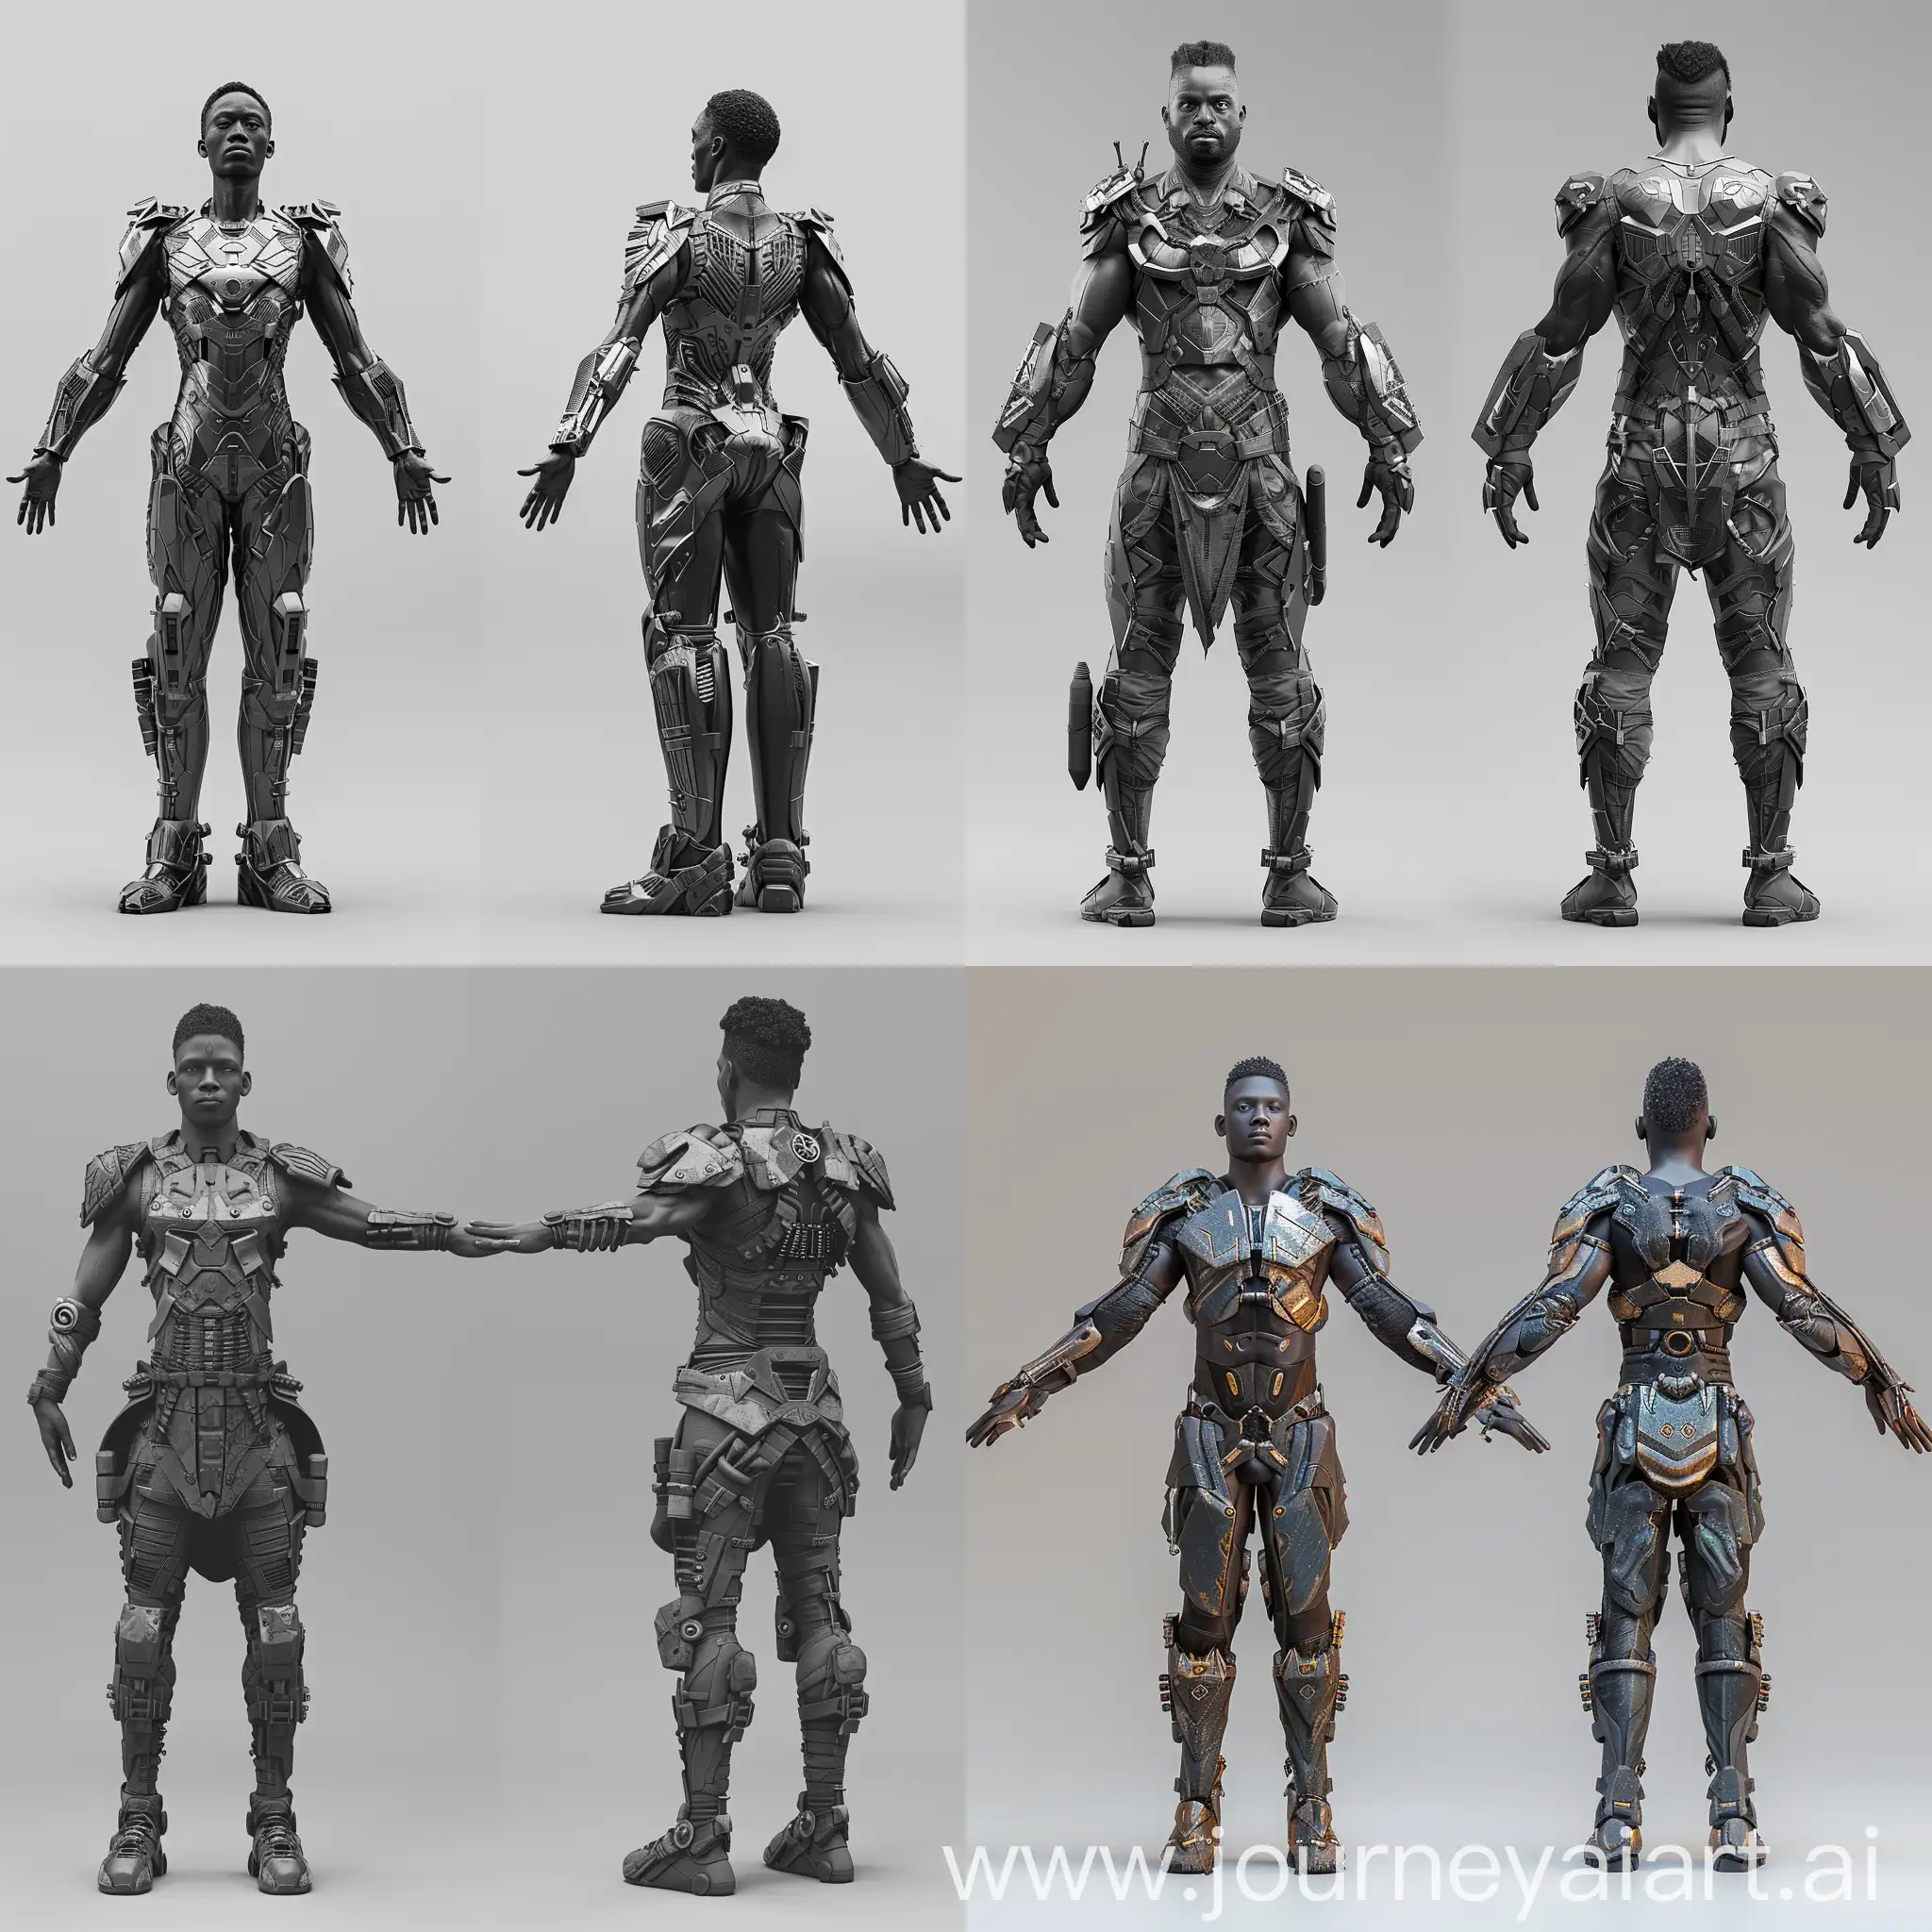 Futuristic-African-Warrior-Dale-Hyperrealistic-Armor-Portrait